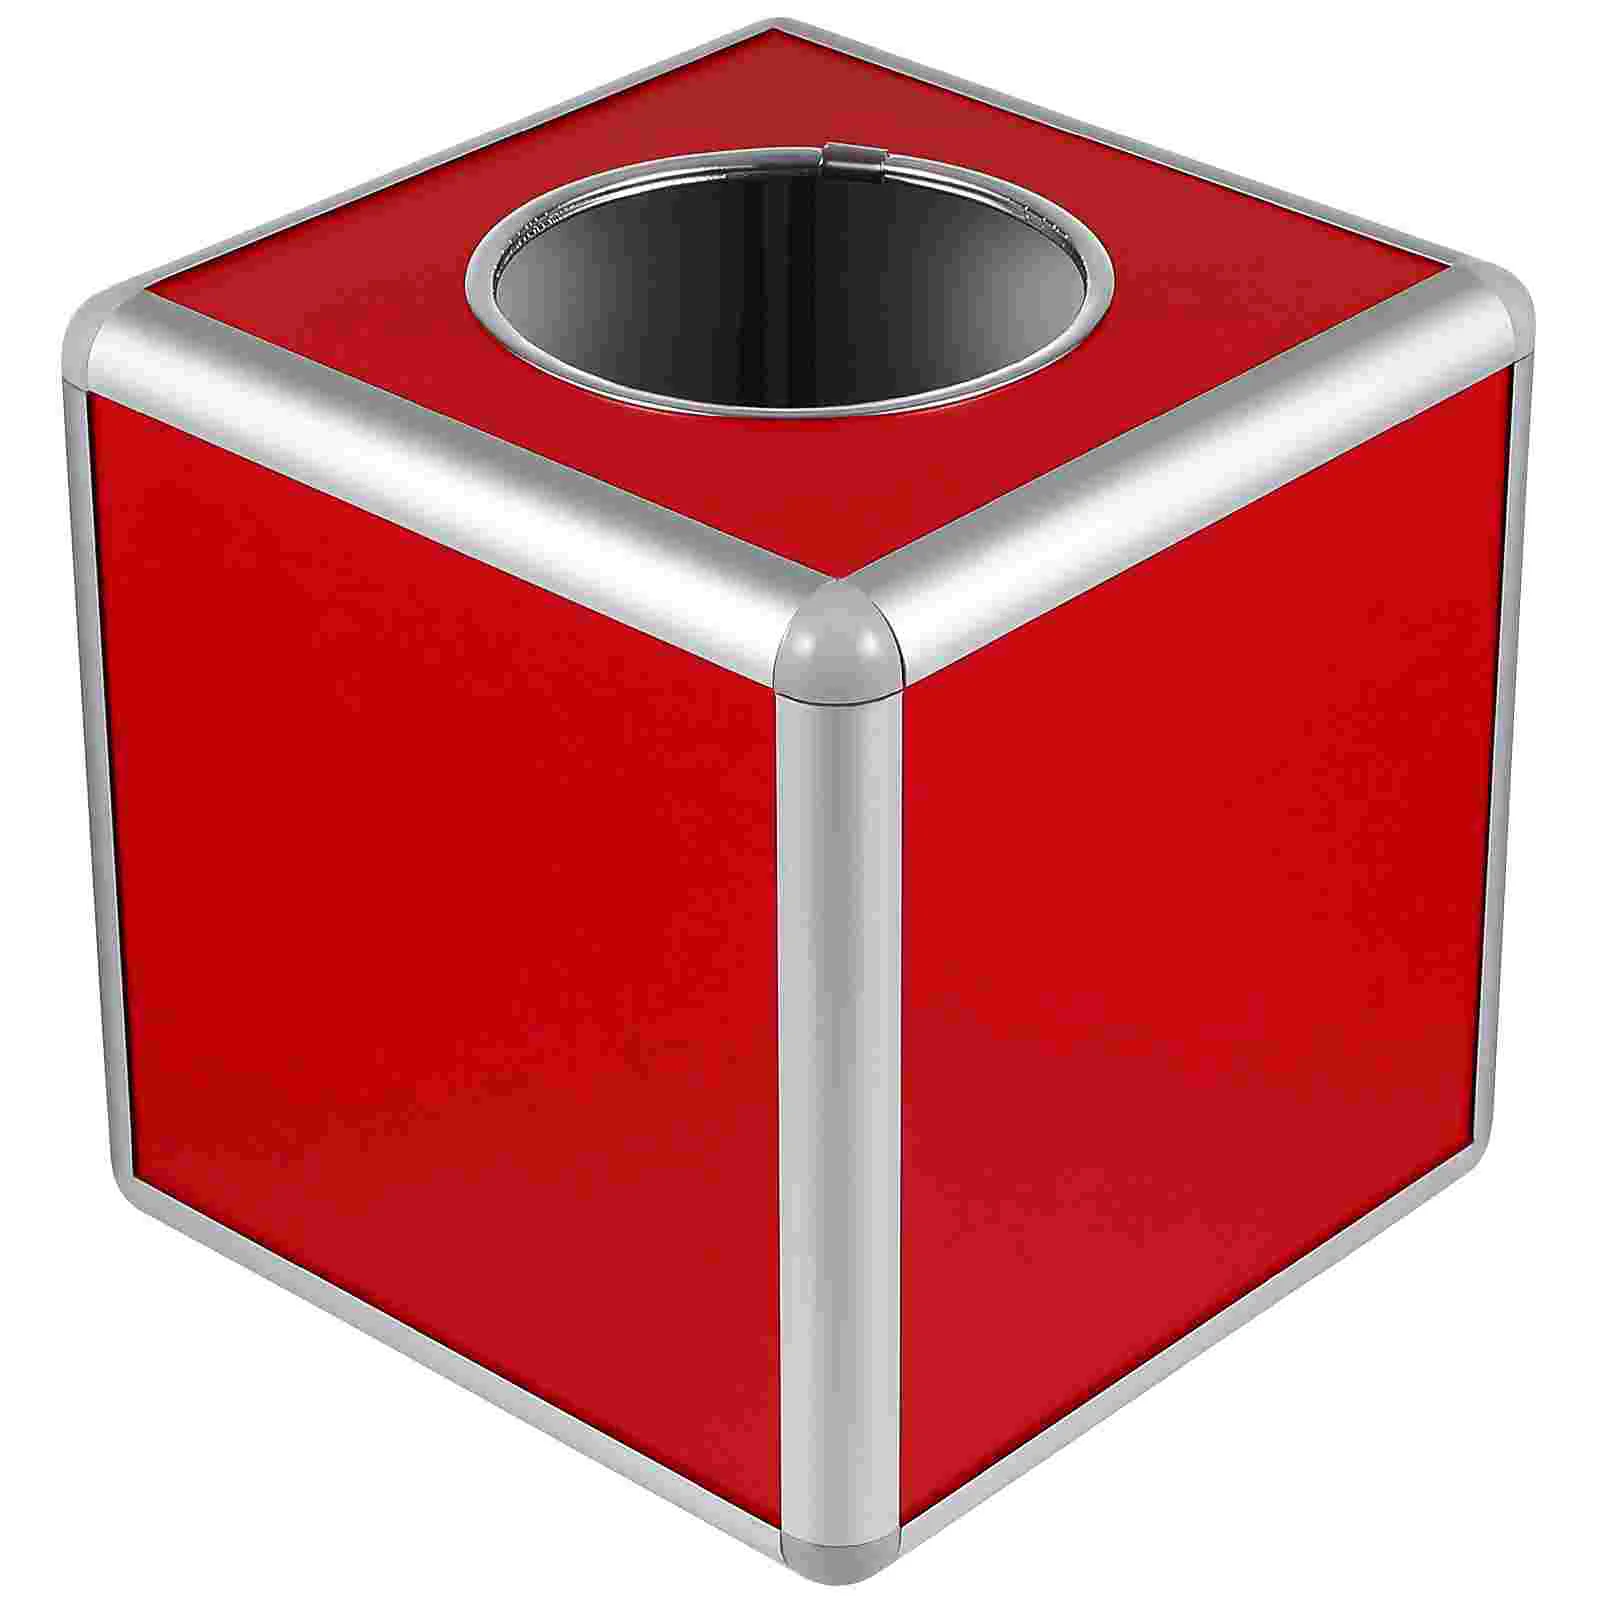 

Lottery Box Raffle Box Storage Ticket Box Ballot Box for Annual Party Meeting Fundraising